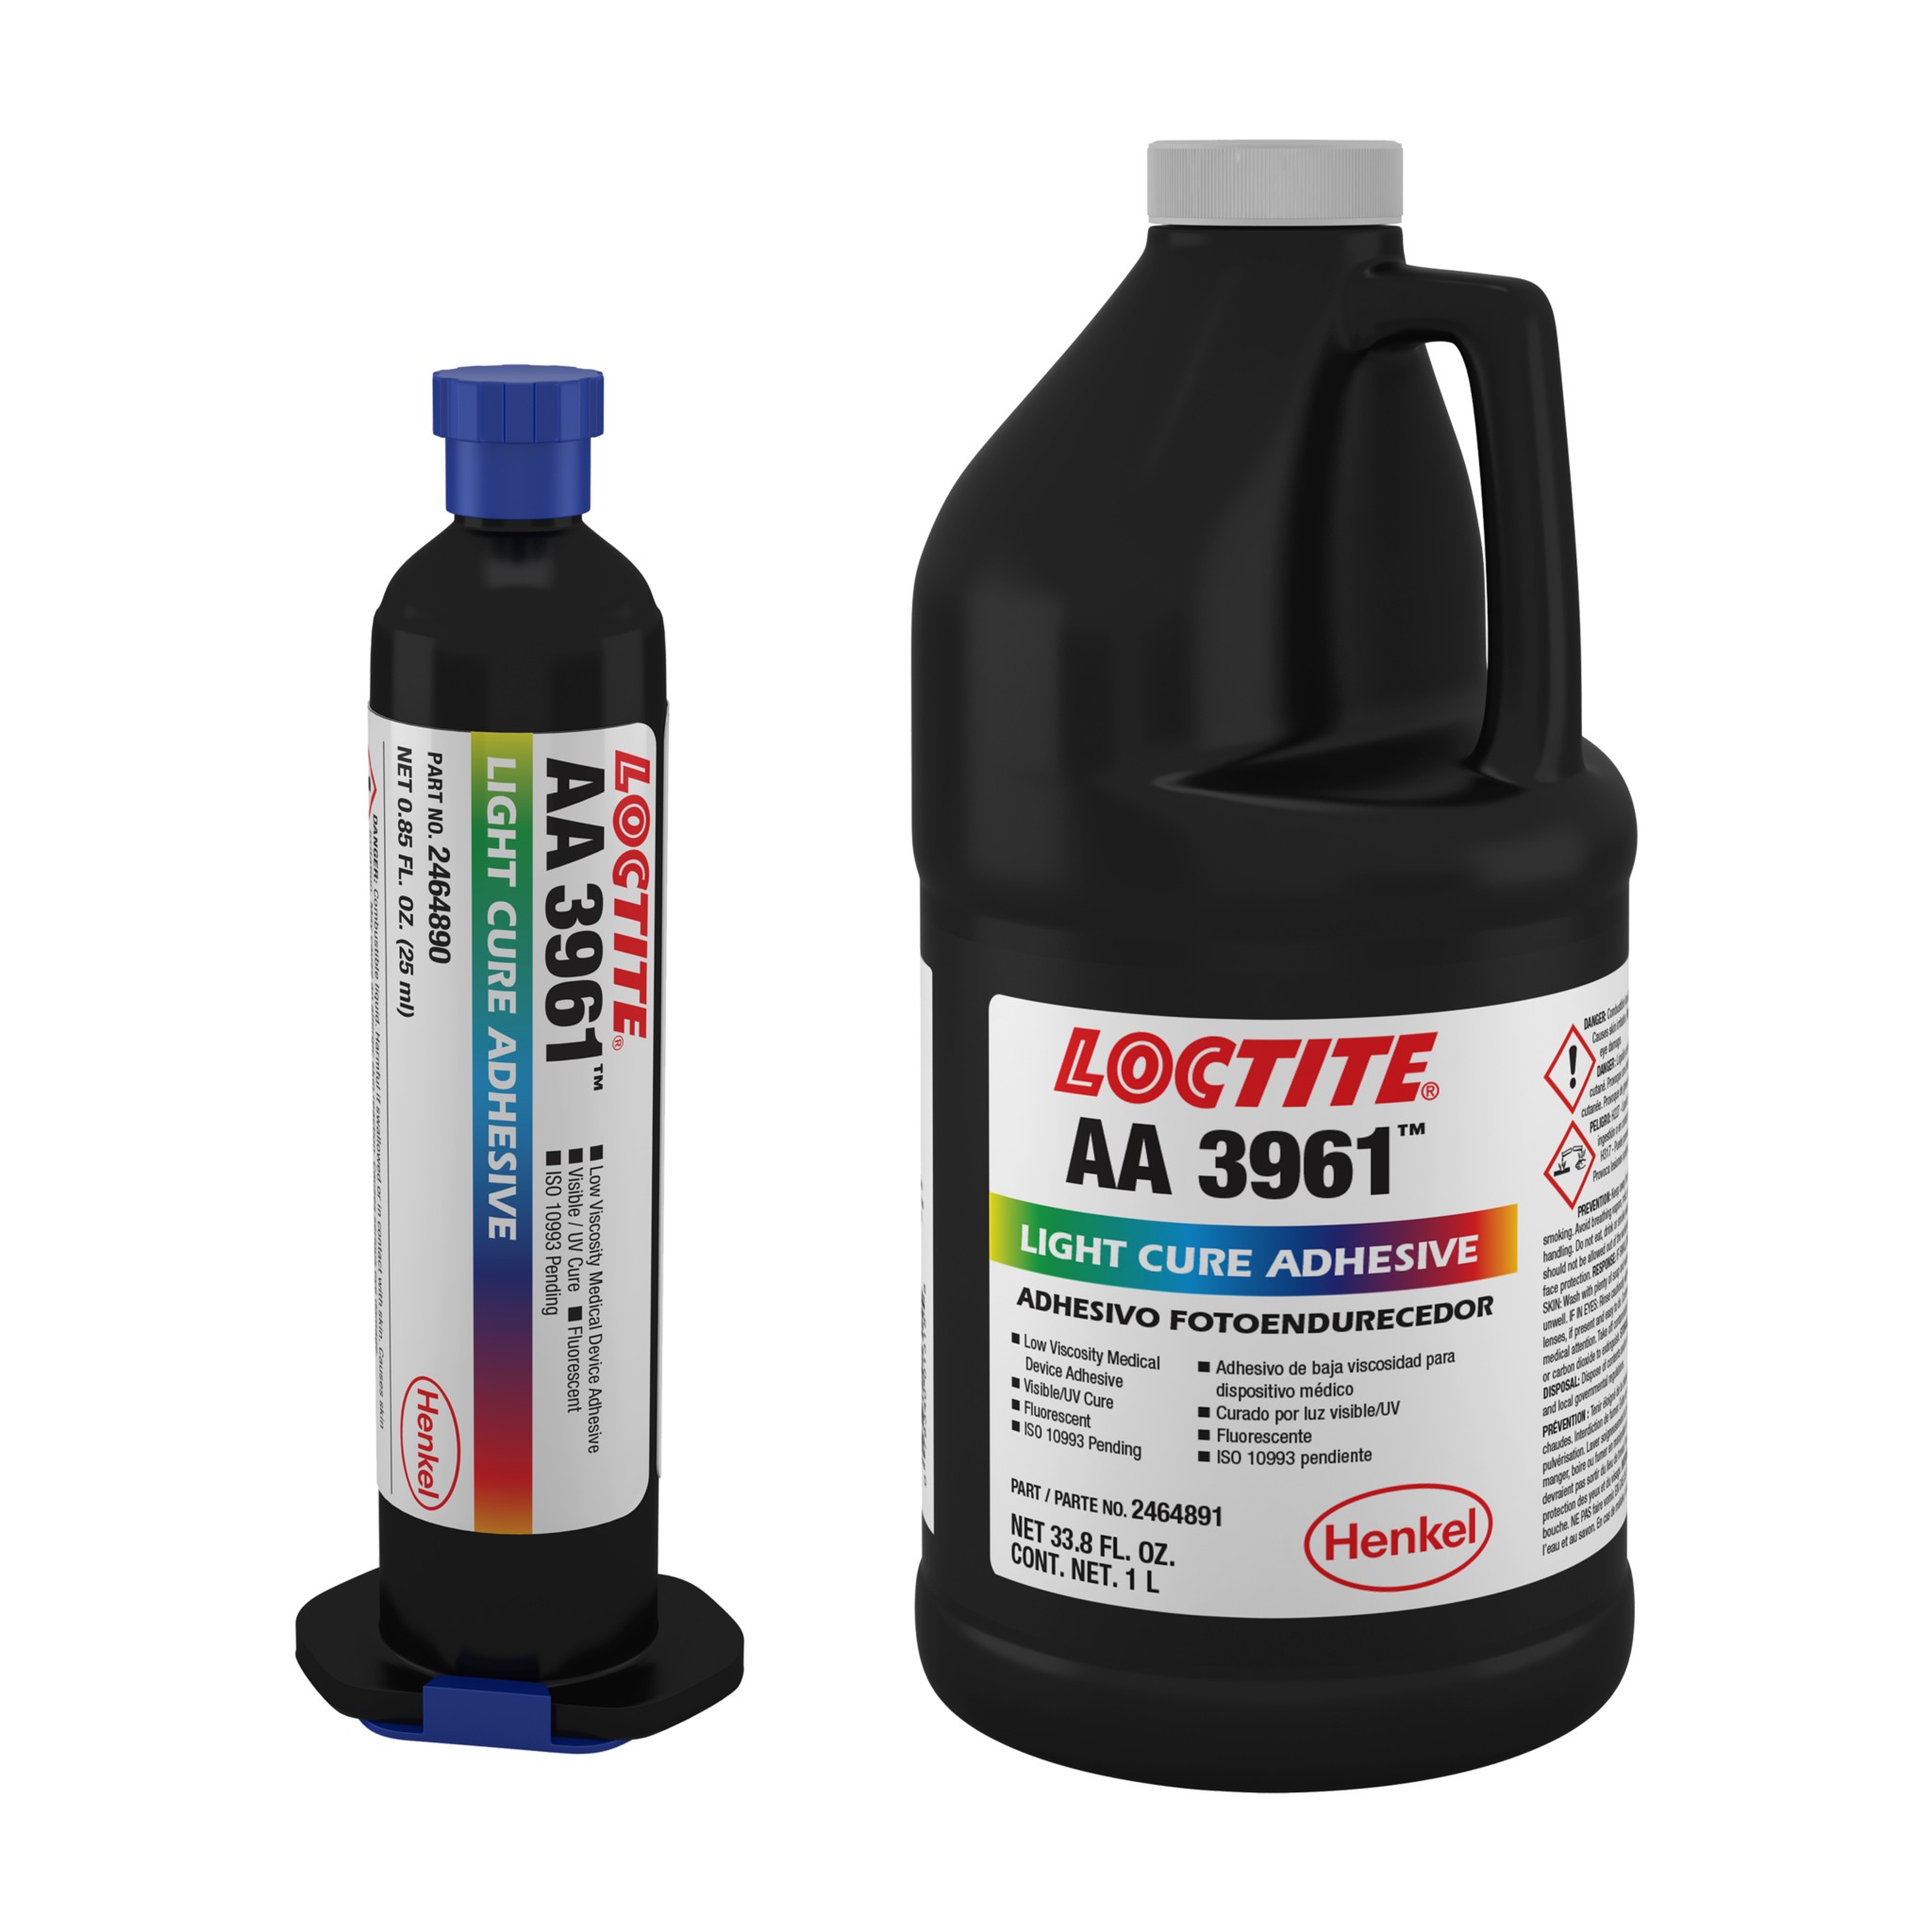 LOCTITE AA 319 – Rückspiegel-Klebe Set - Henkel Adhesives